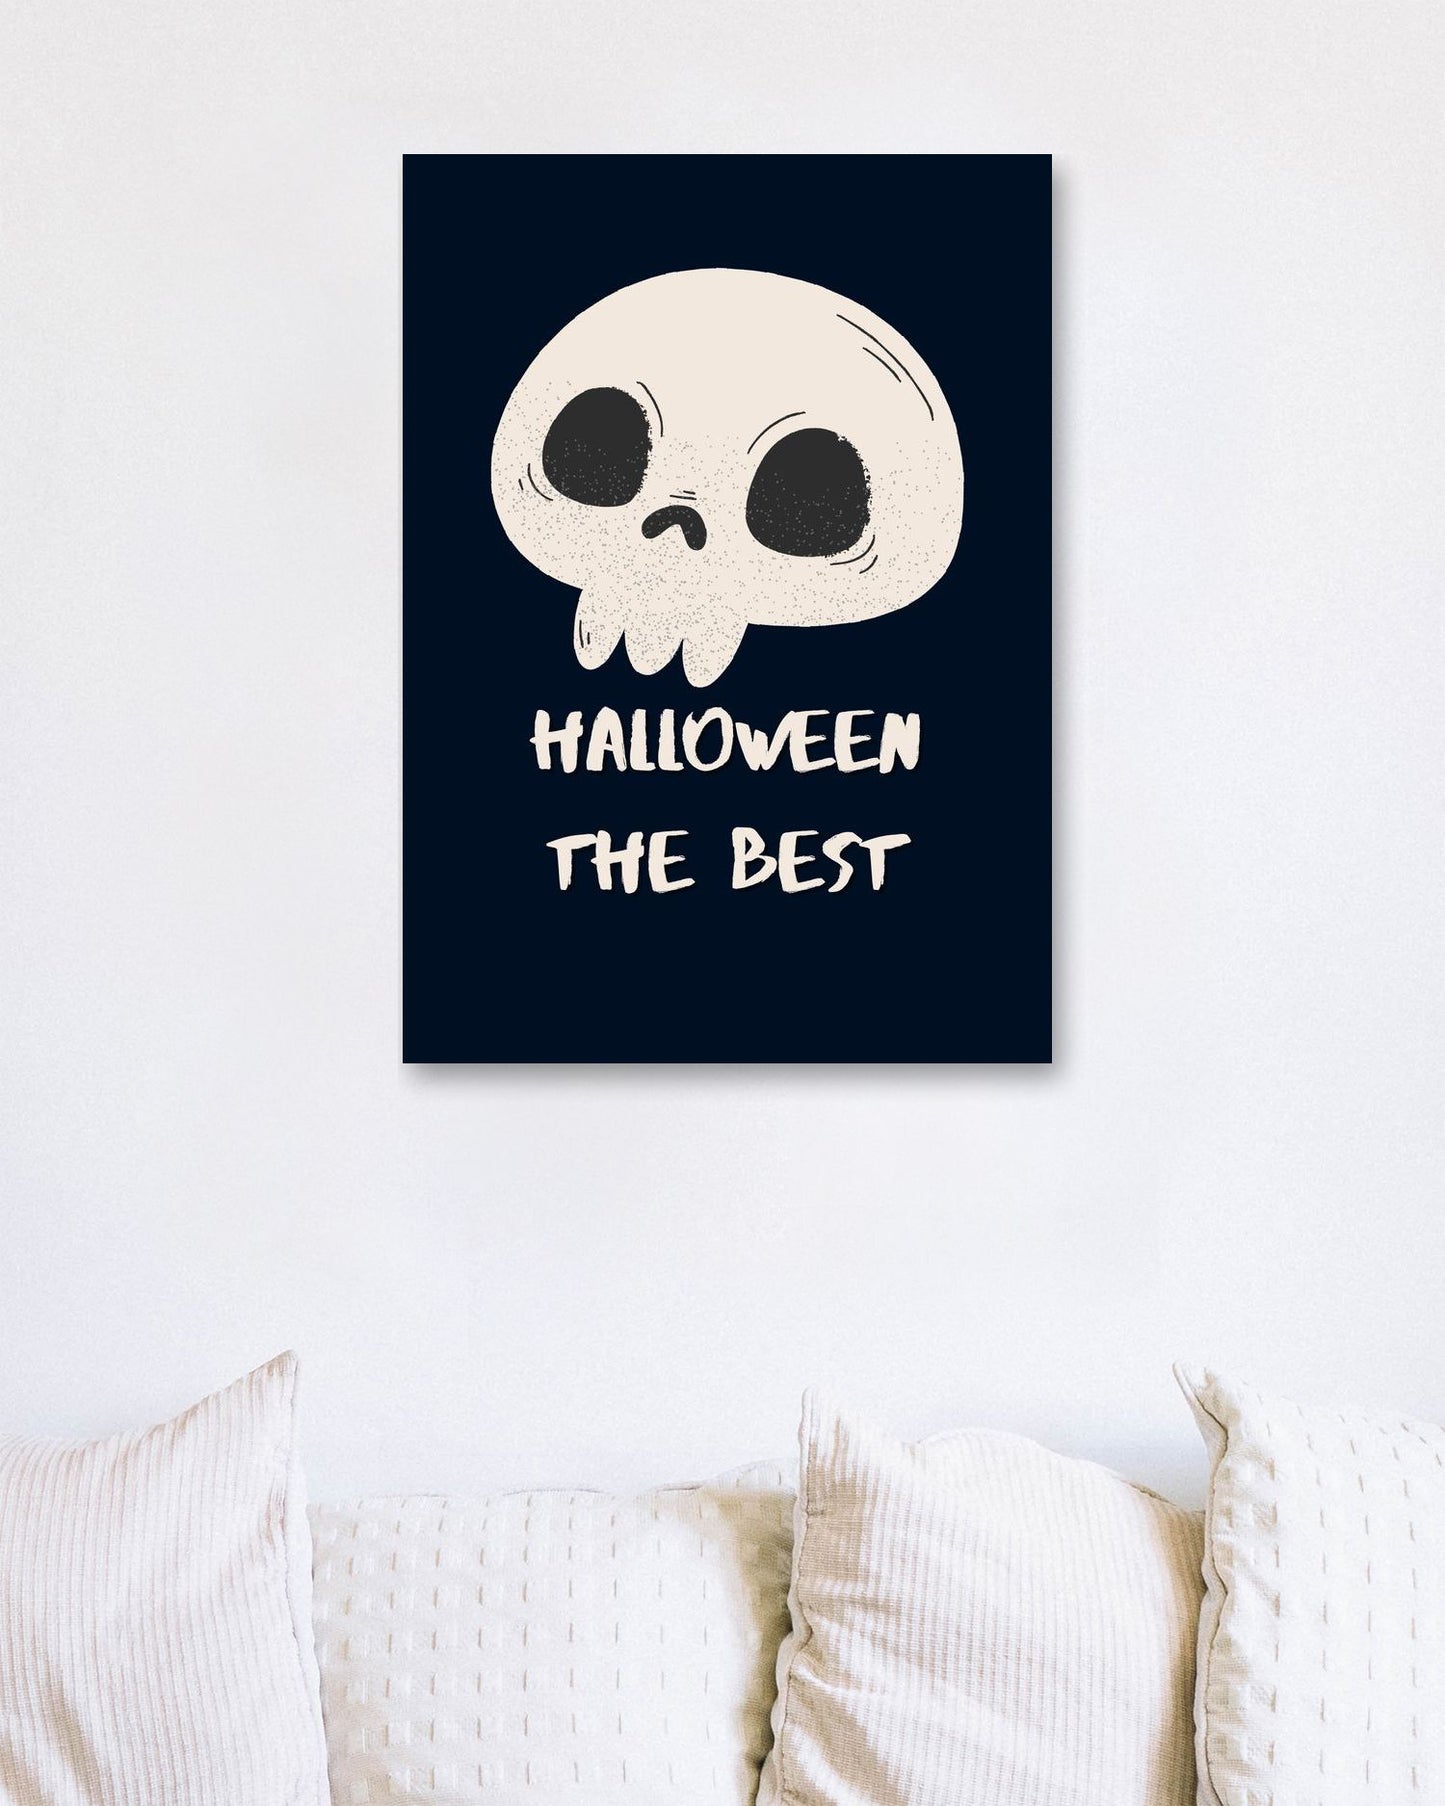 halloween the best - @dhmsnm